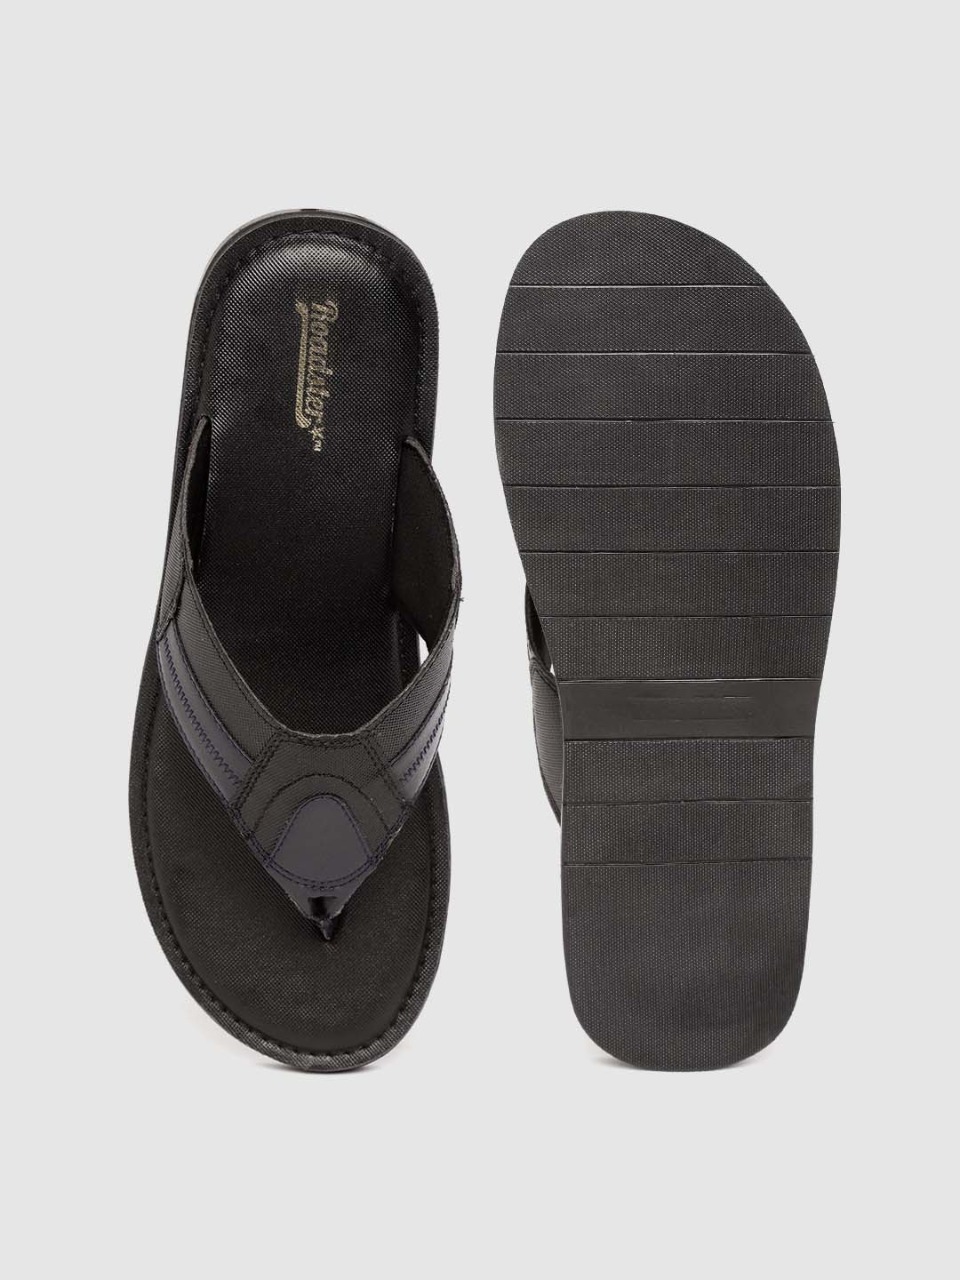 Roadster Men Coffee Brown Perforated Comfort Sandals